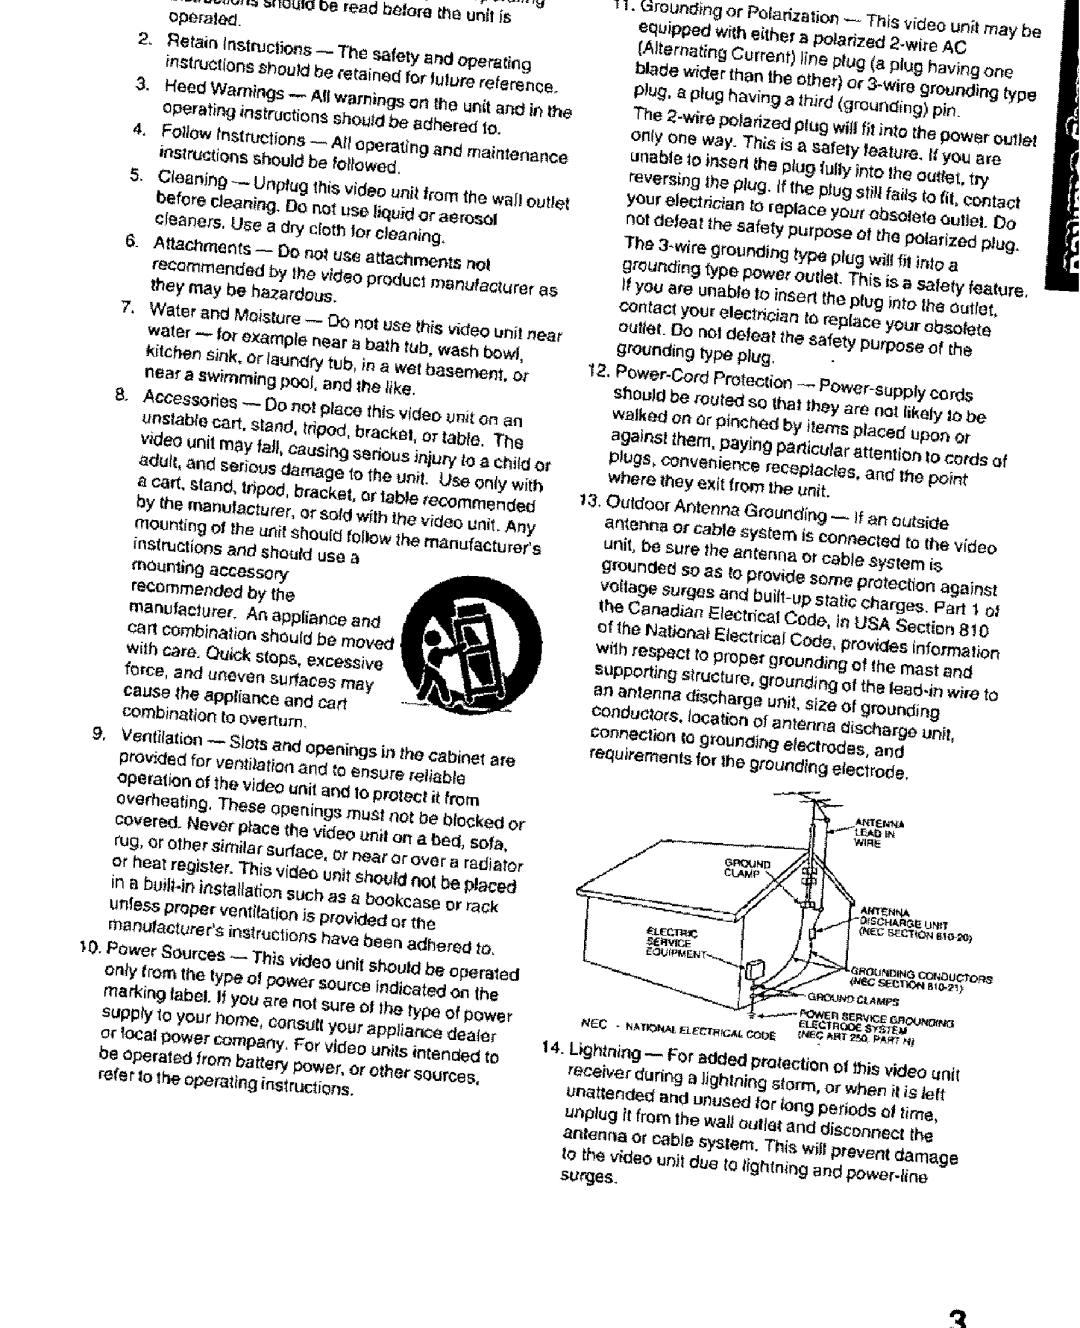 Panasonic PV-DV101 manual 4, Fofiowthstruotiens--Alloperattngandmaintenance, surges 